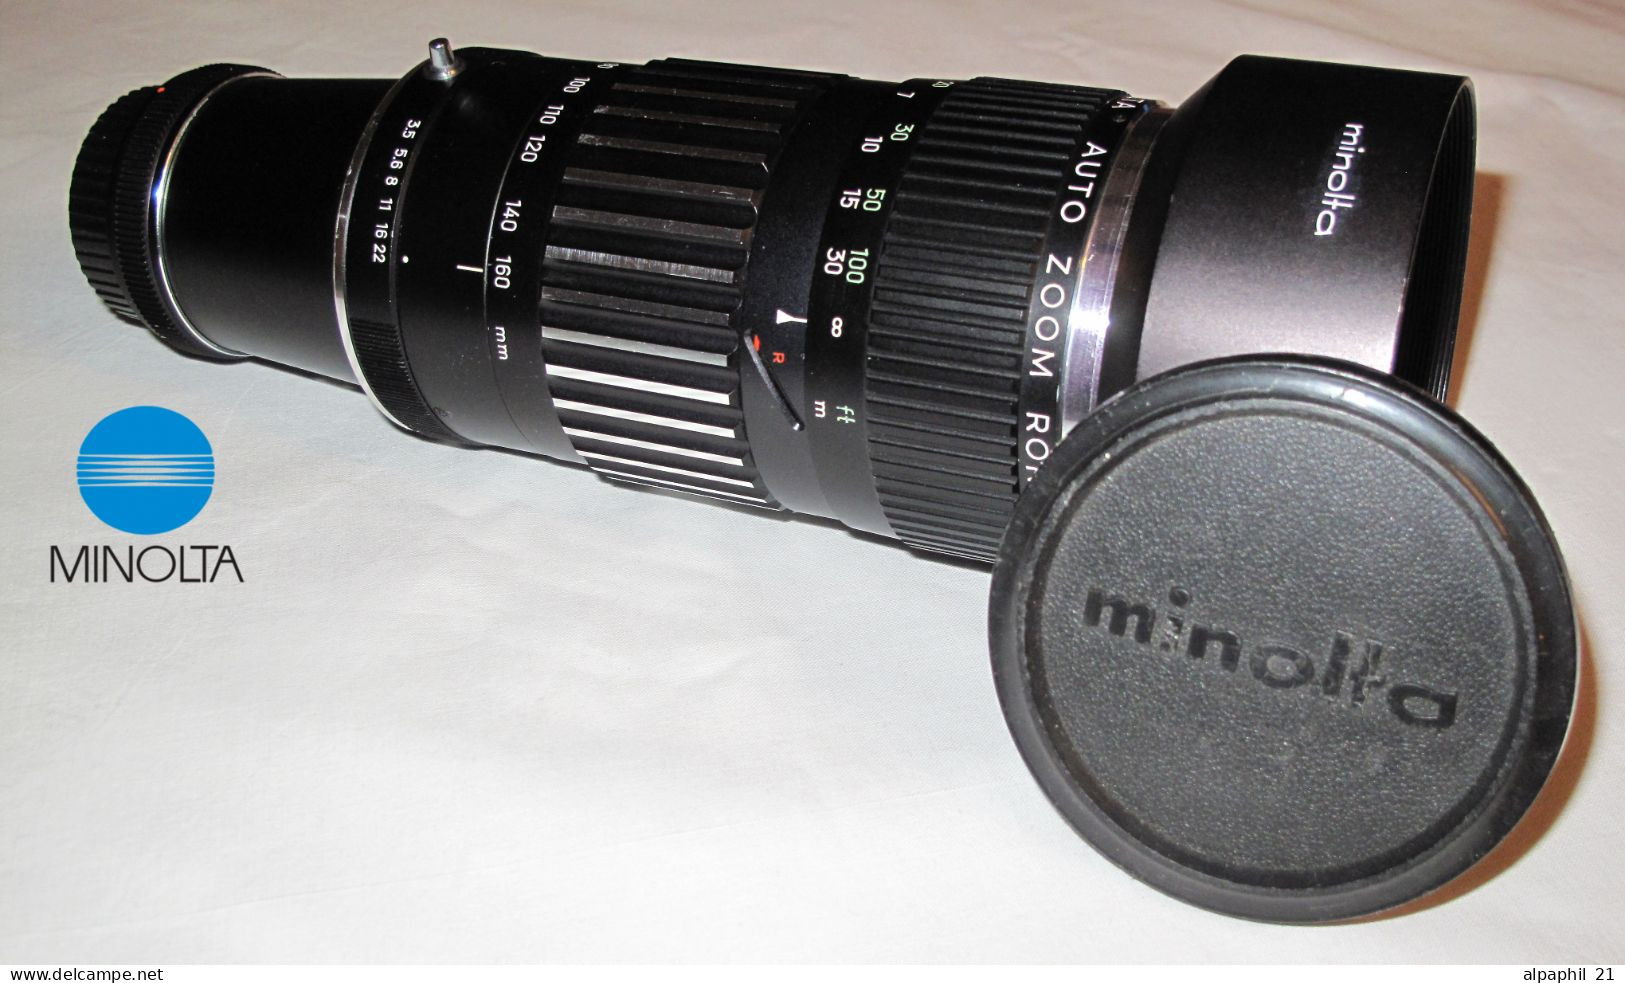 Minolta Rokkor Zoom Lens F3.5, 80-160 Mm - Lentes